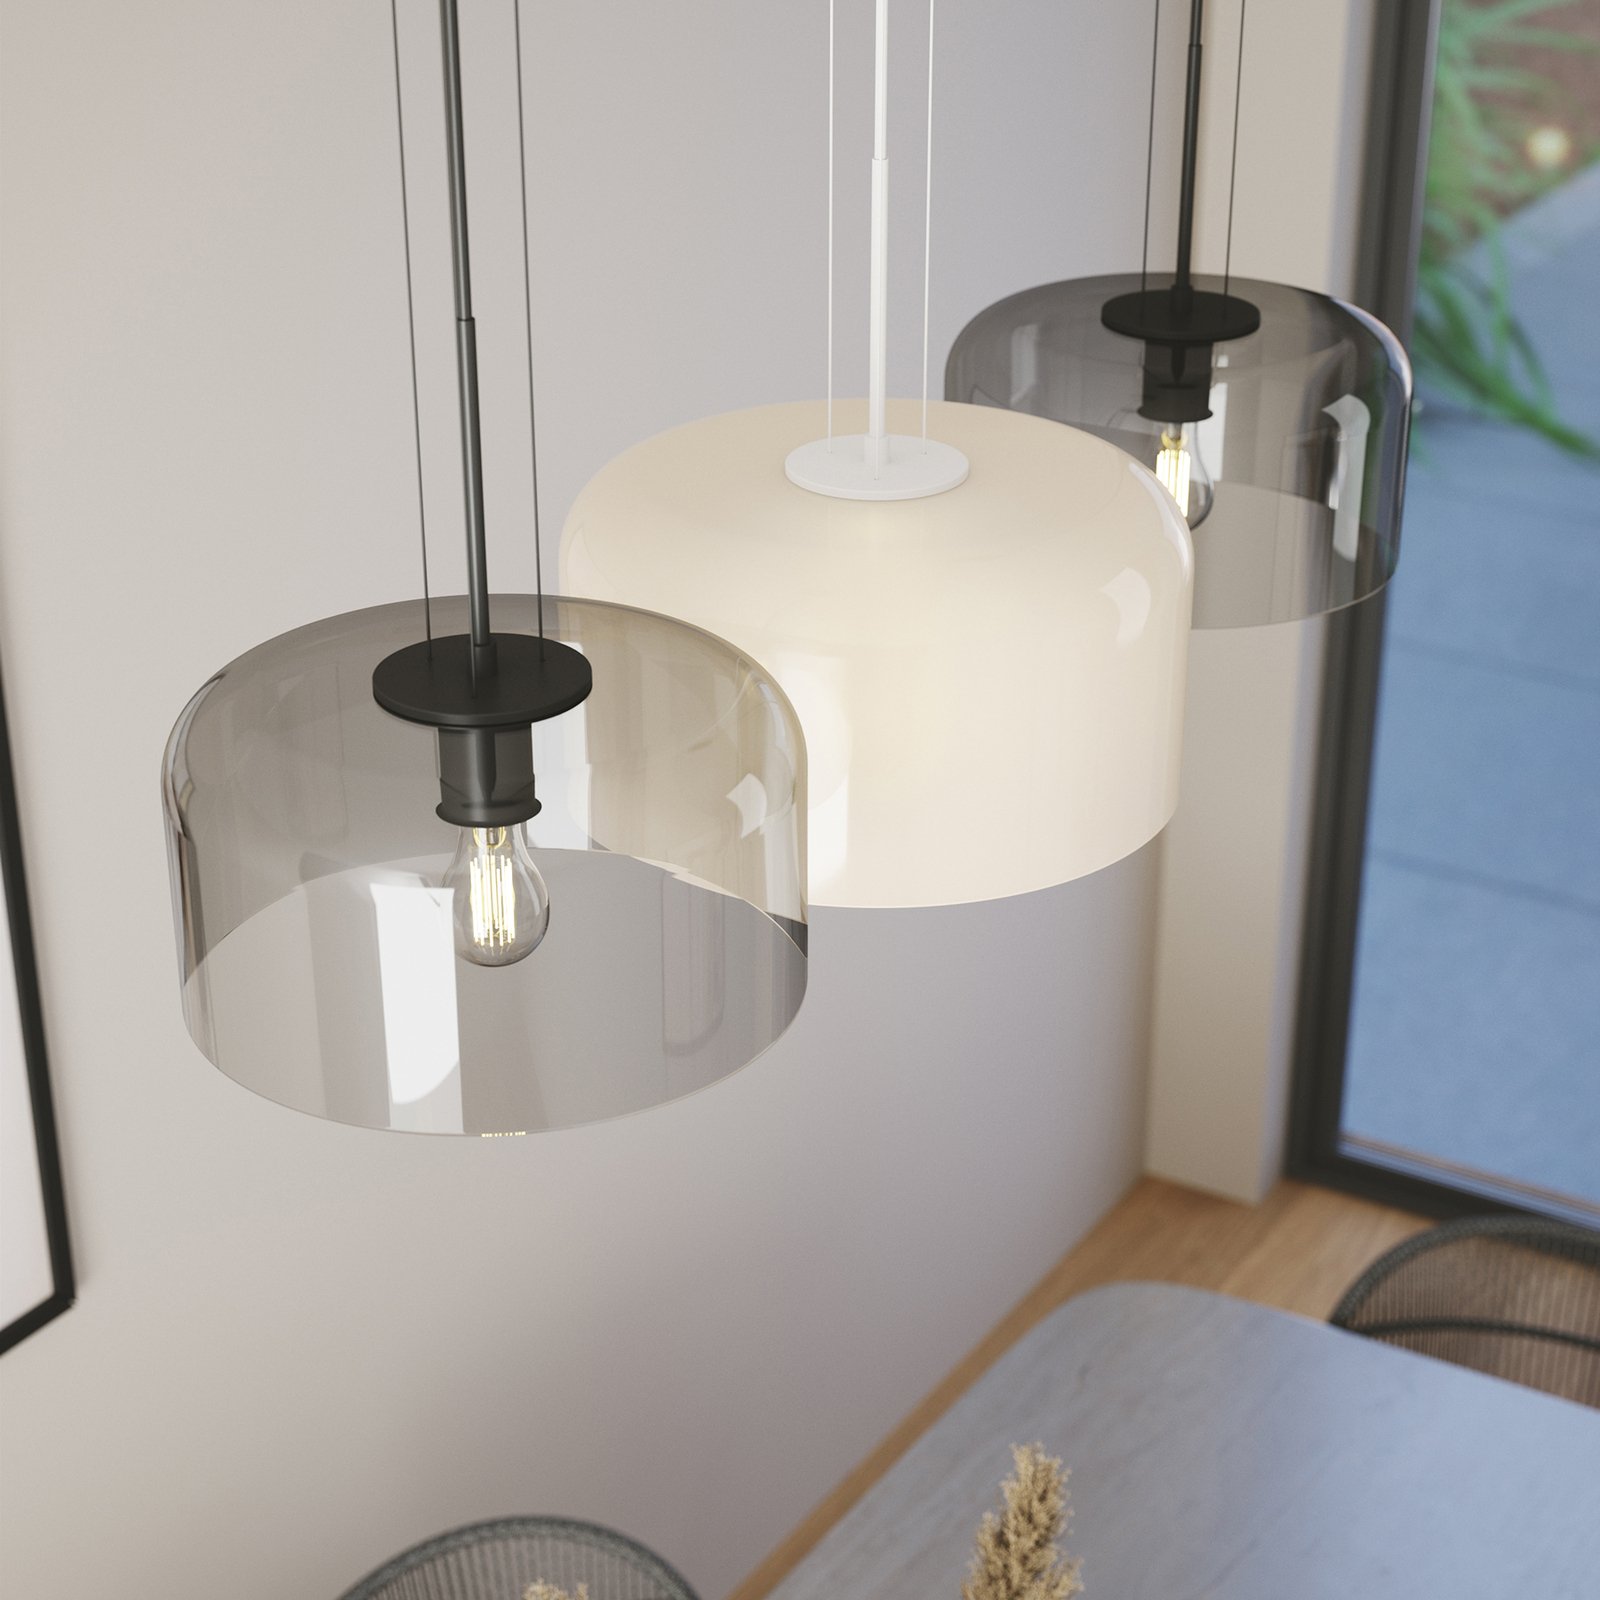 Gibus S30 pendant light, glass lampshade, grey